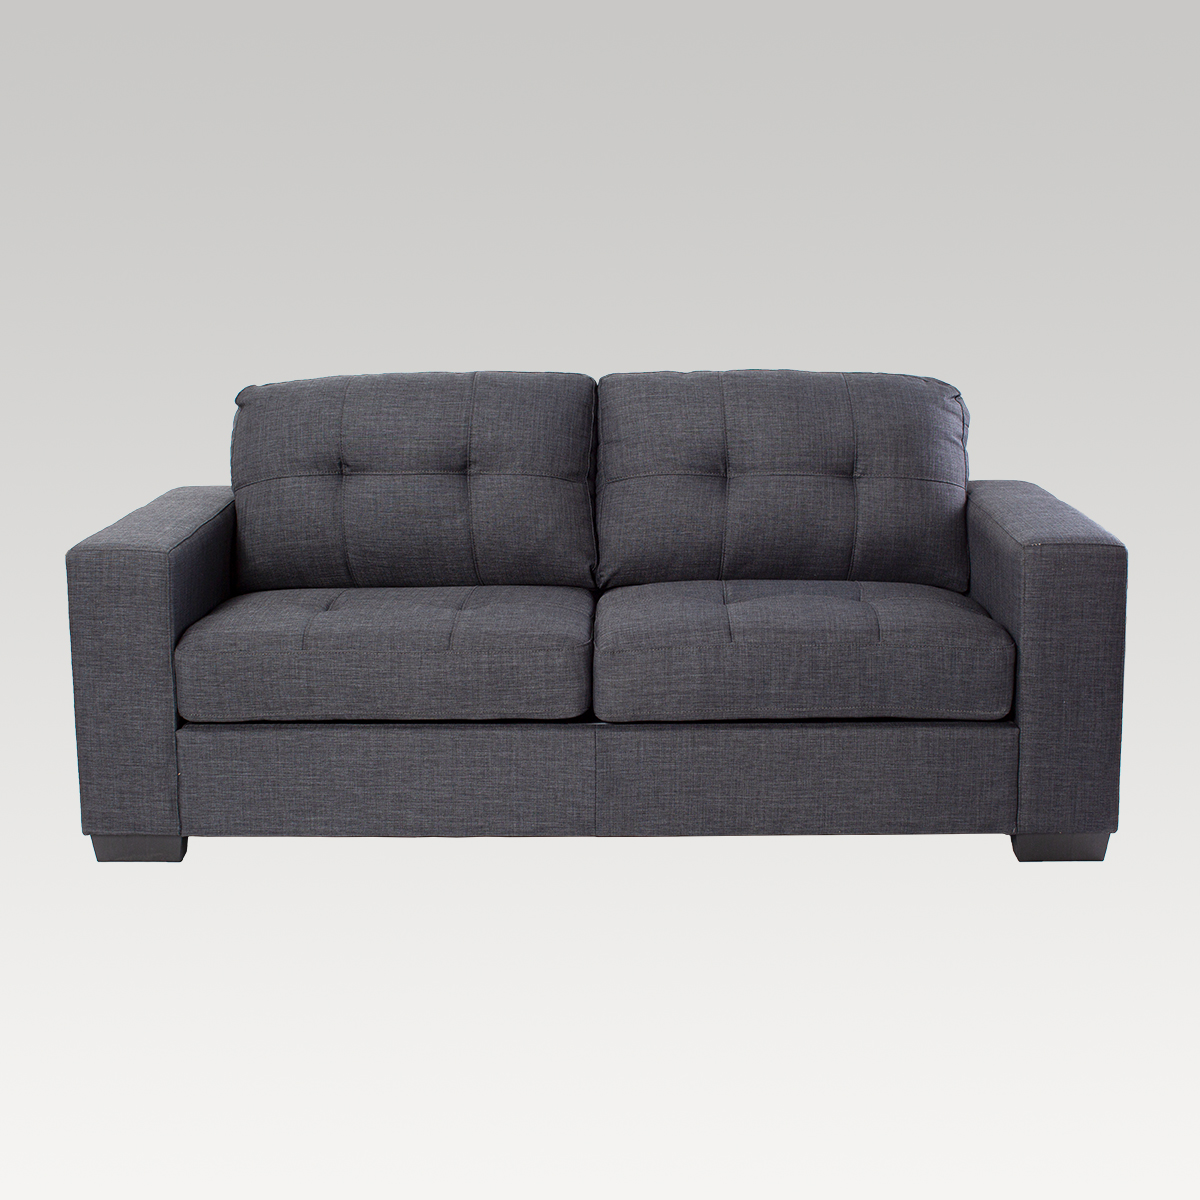 Image of Jeri Fabric Sofa Bed - 2.5 Seater